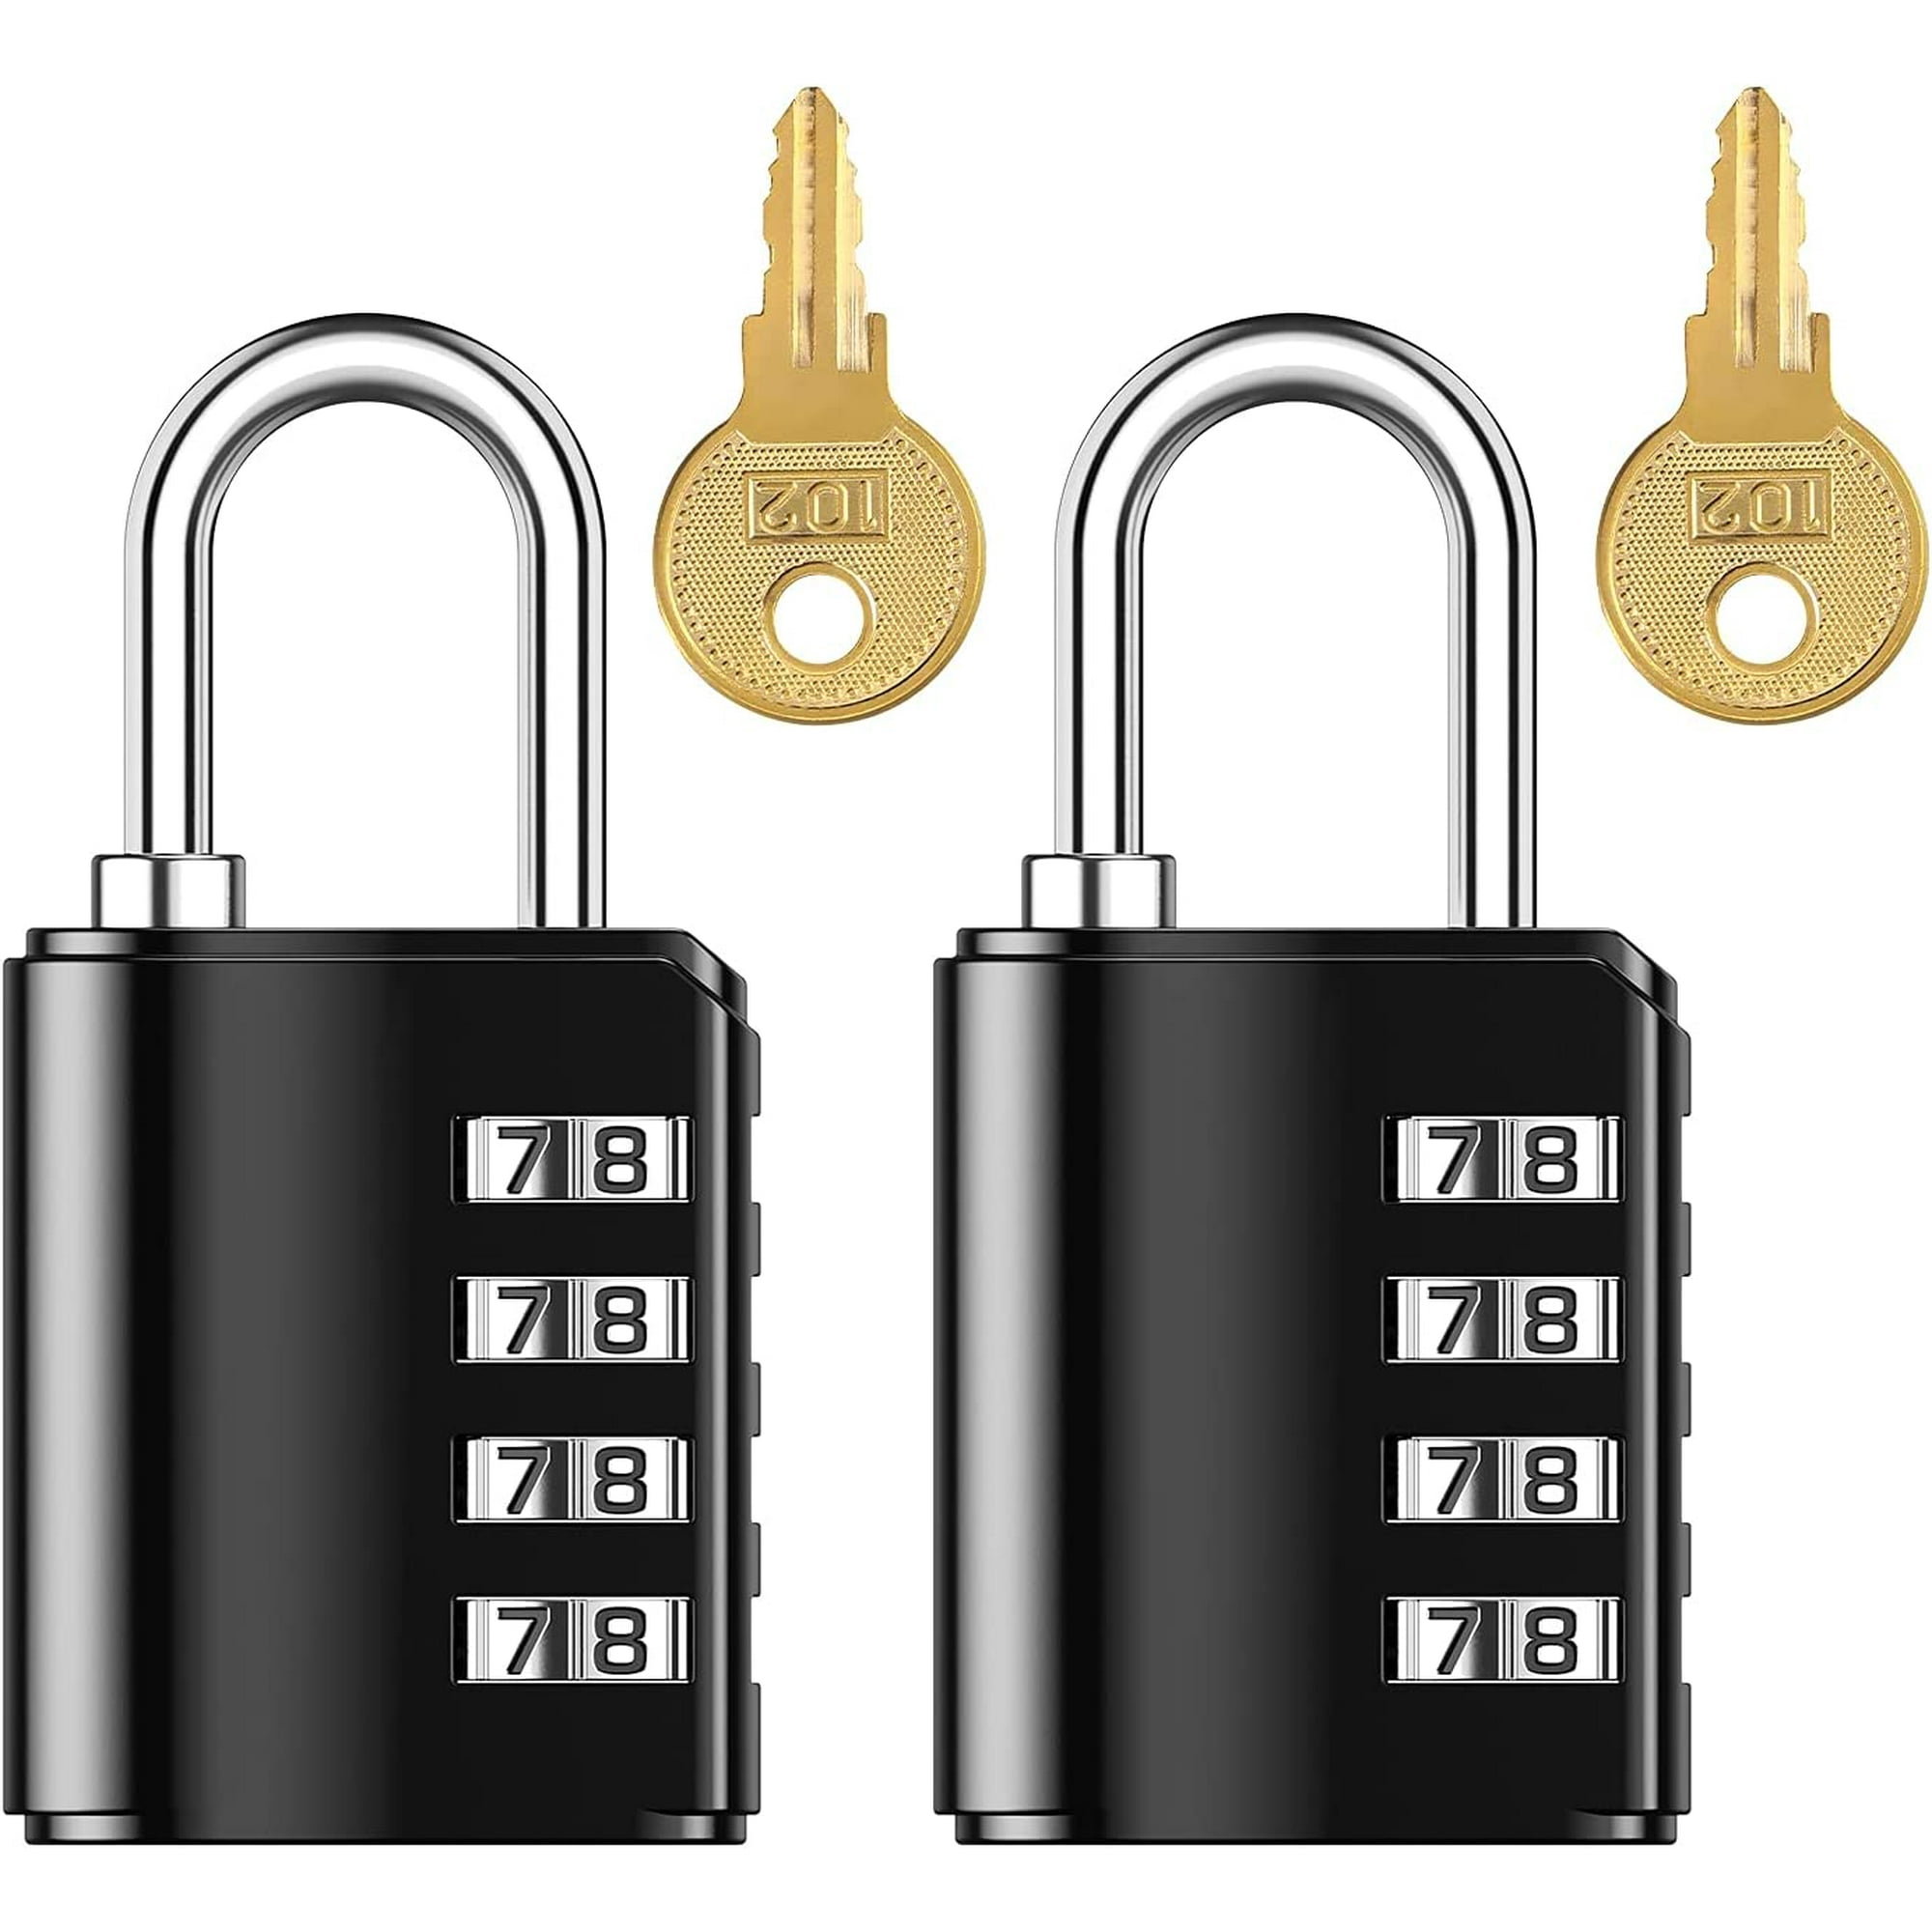 Combination Lock for Gym Lockers – Master Lock Locker Combination